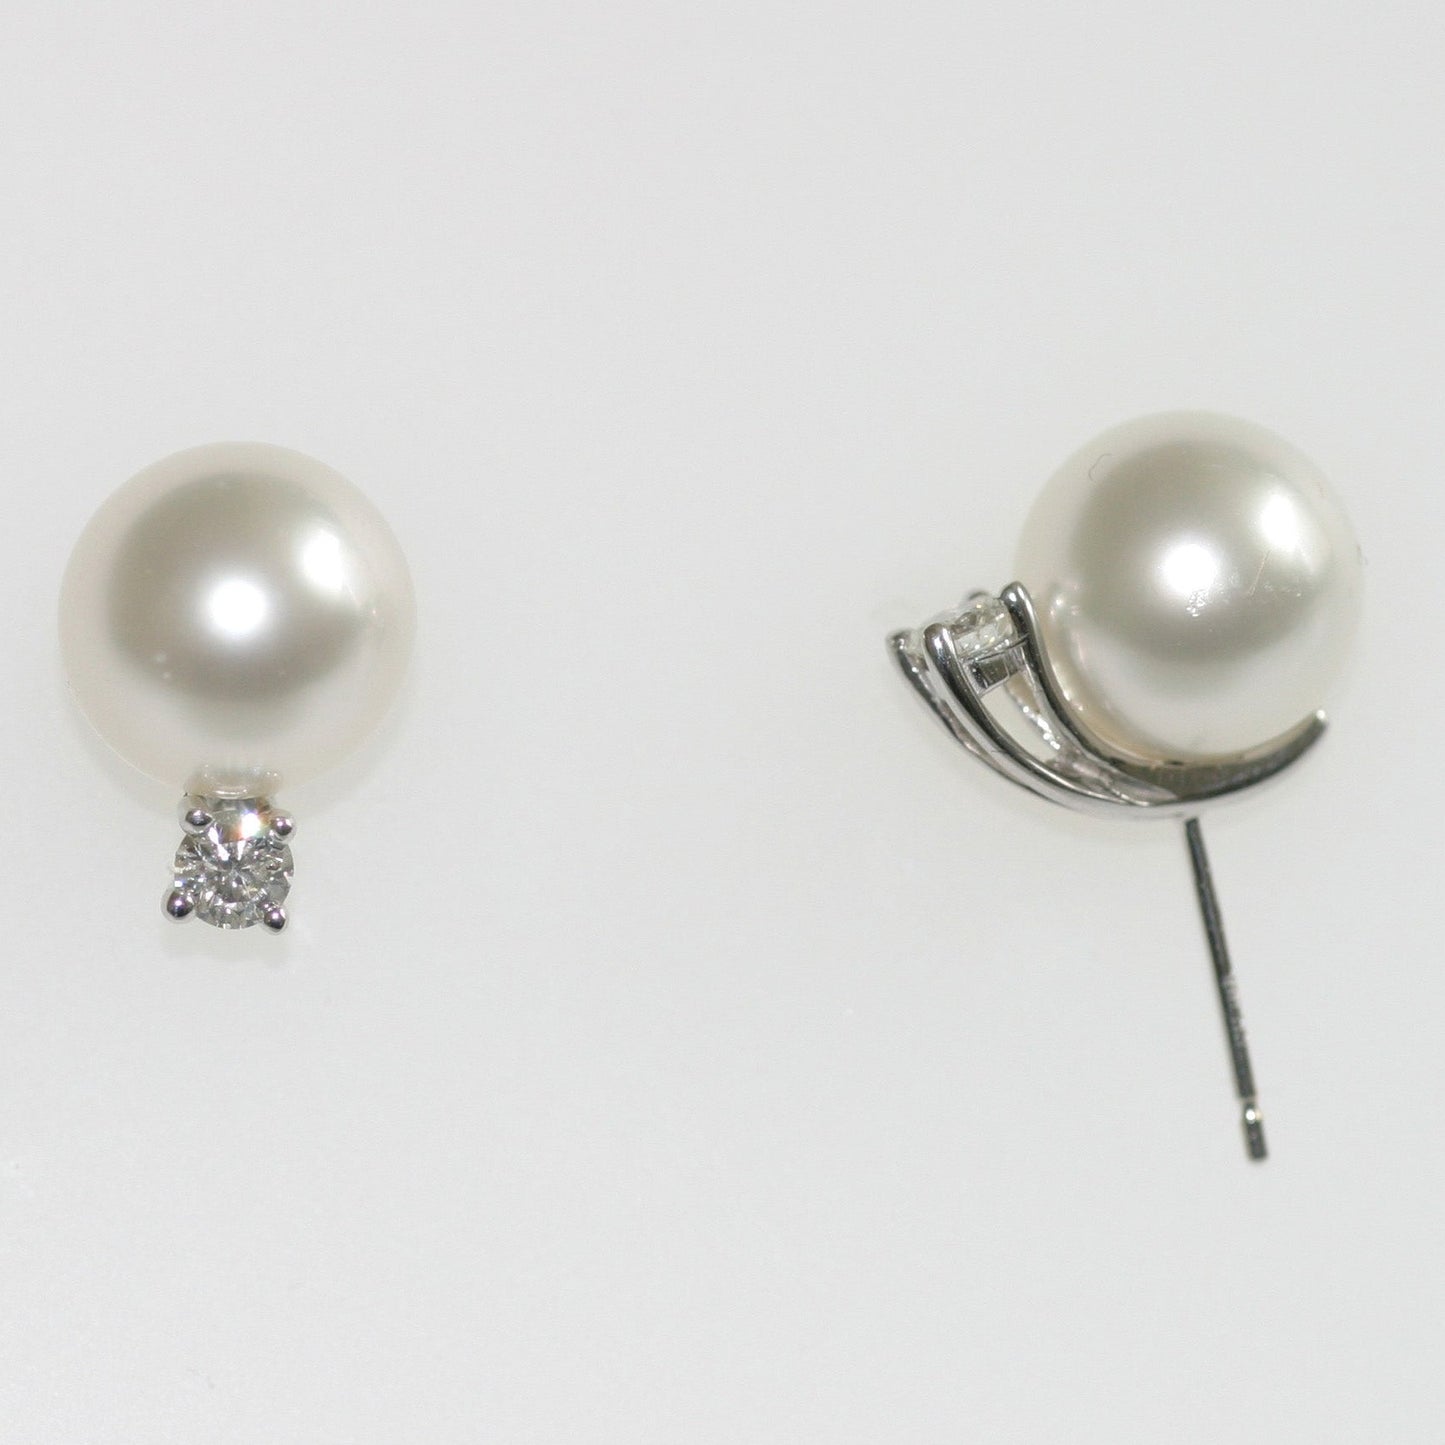 Royal Pearl Earrings with Diamonds